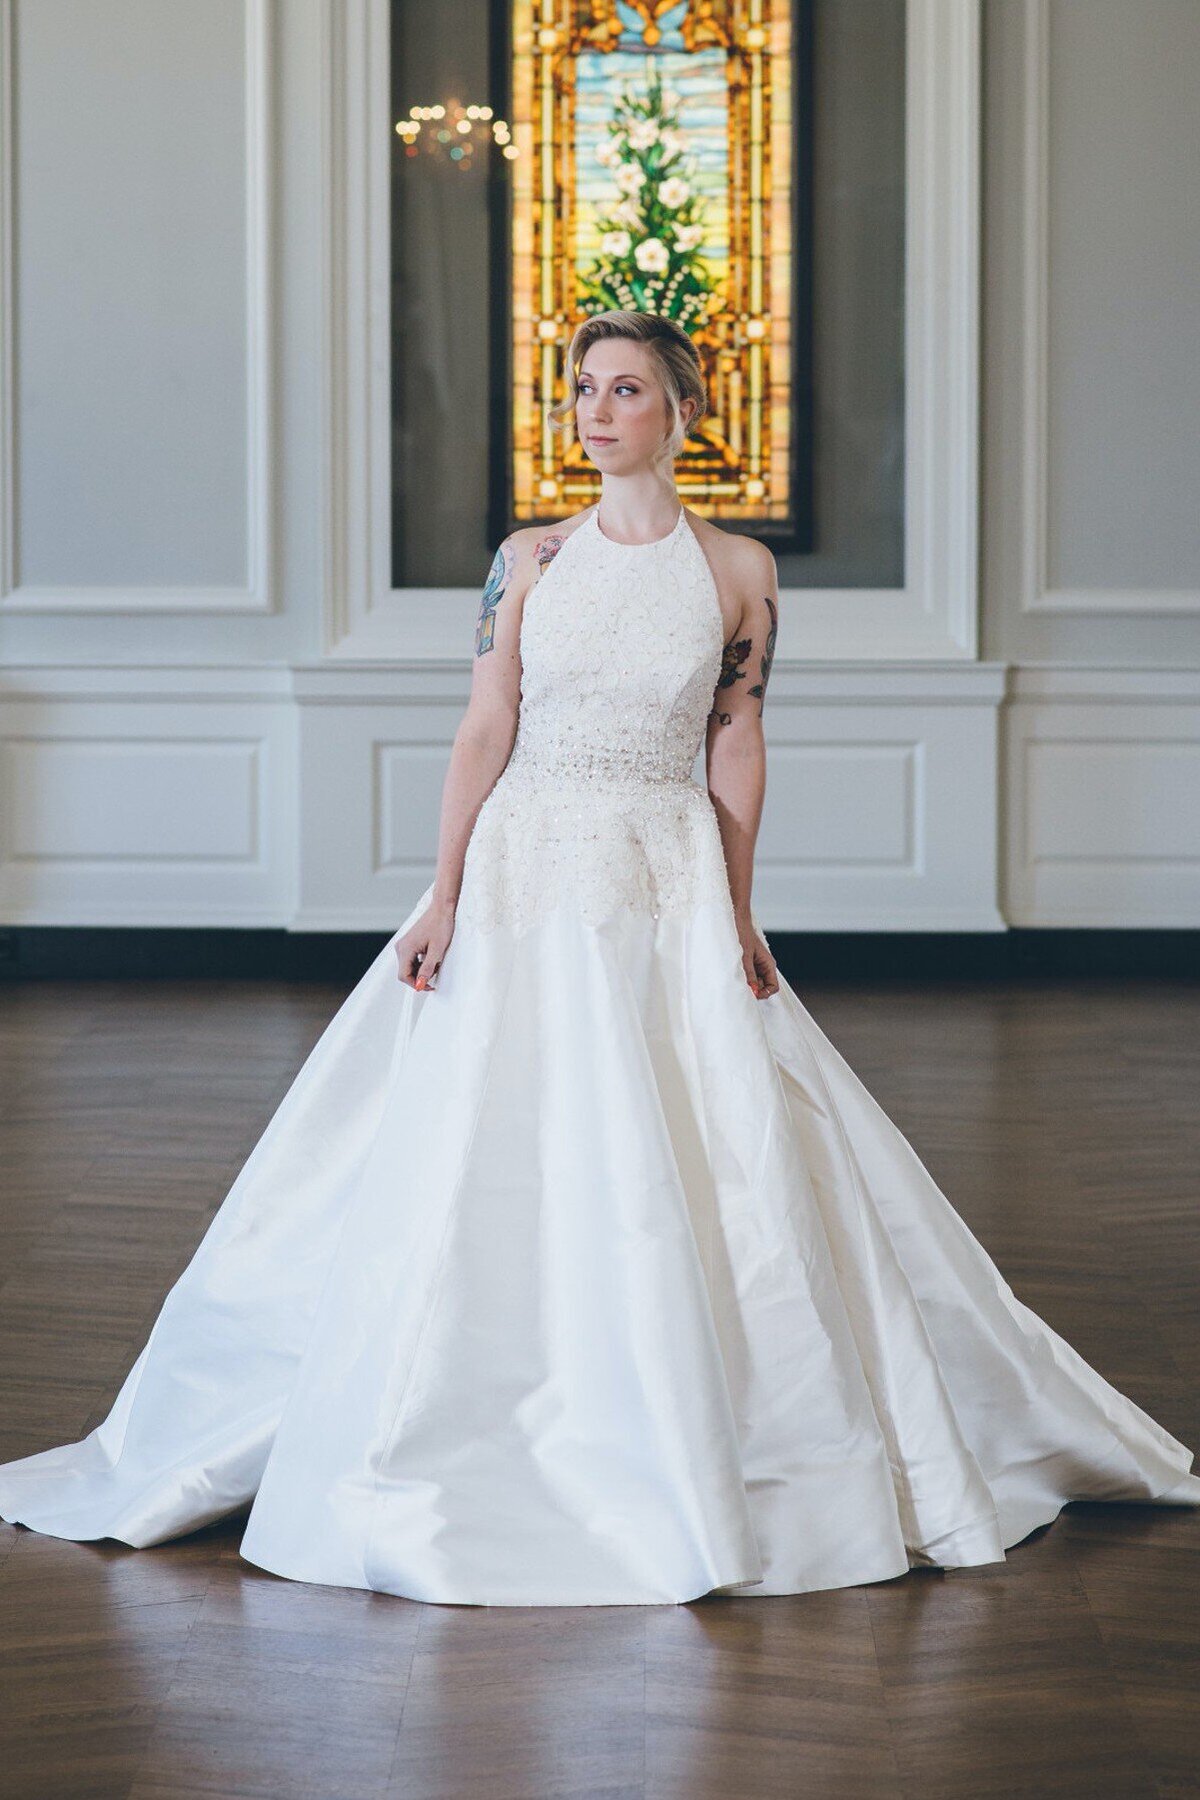 Karli is a modern ballgown wedding dress with a textured lace halter top by indie bridal designer Edith Elan.